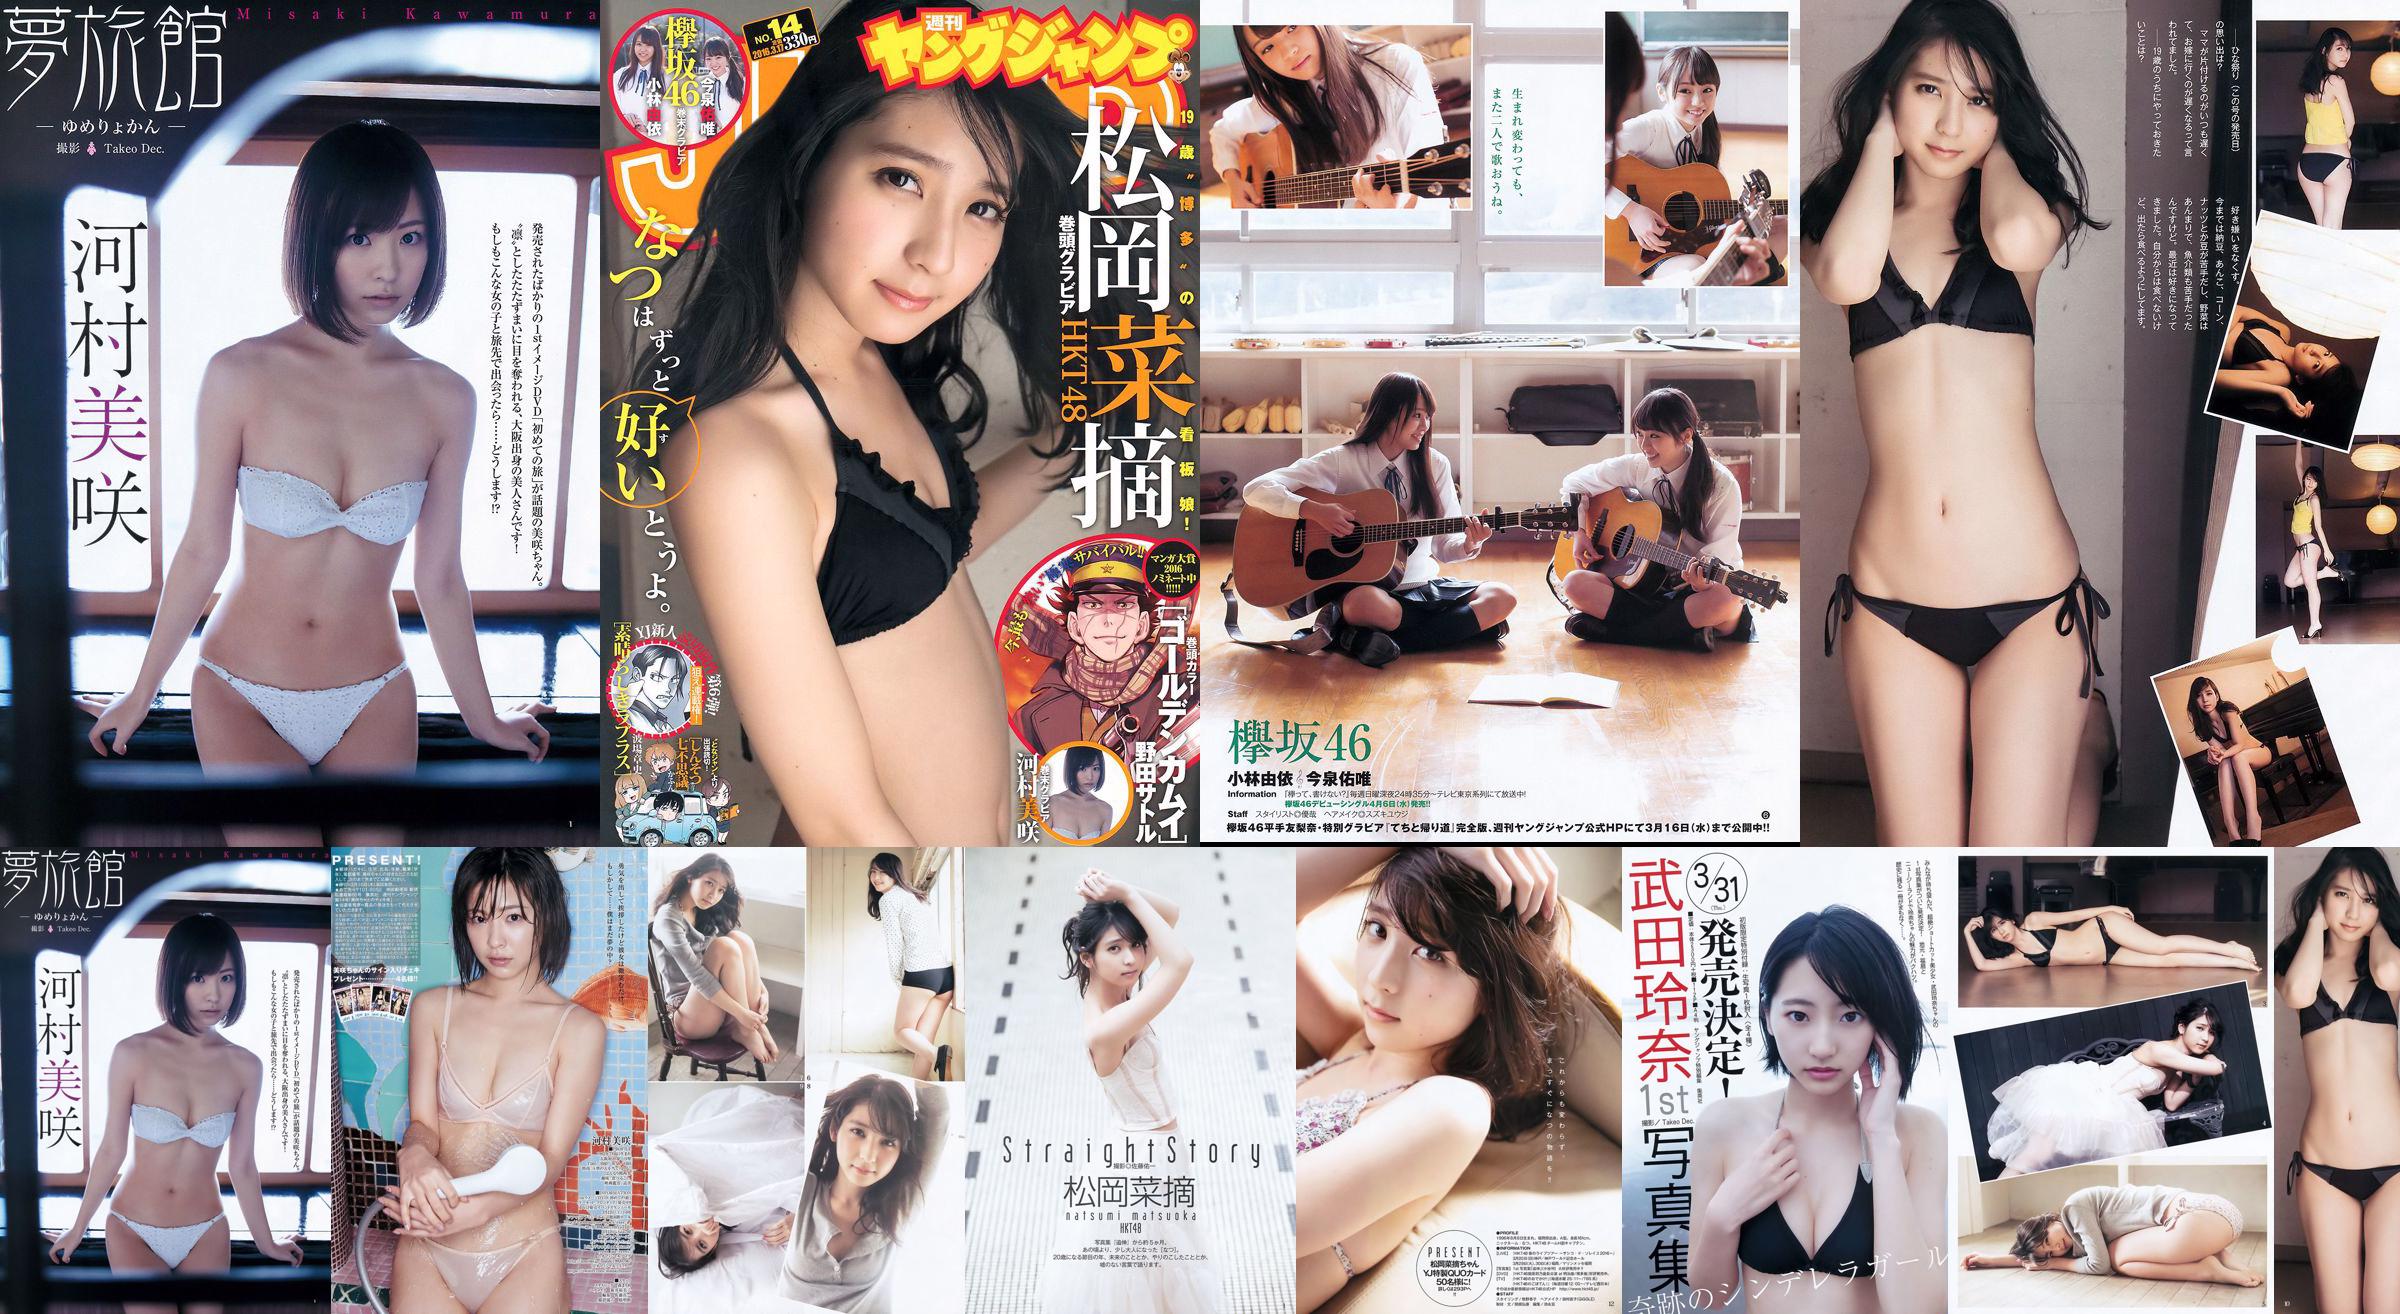 Choix de légumes Muraoka Yui Kobayashi Yui Imaizumi Misaki Kawamura [Weekly Young Jump] Magazine photo n ° 14 2016 No.a1ec98 Page 1